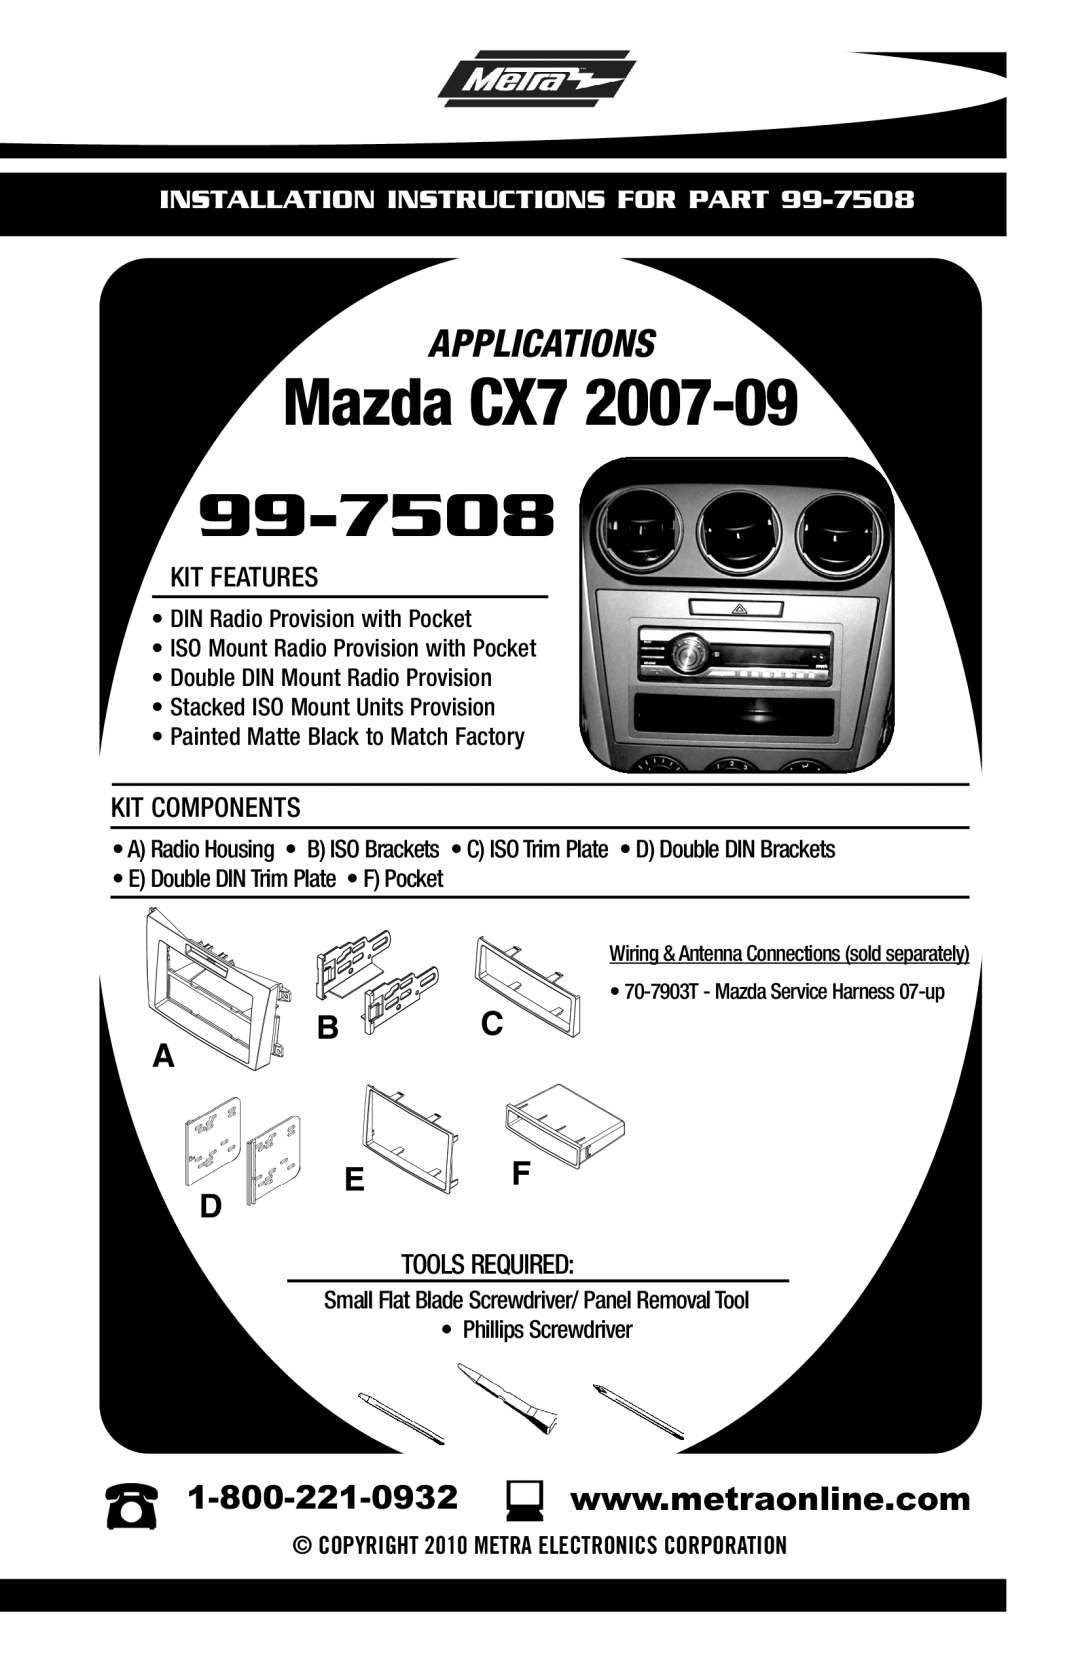 Metra Electronics 99-7508 installation instructions Mazda CX7, Applications, Installation Instructions For Part 